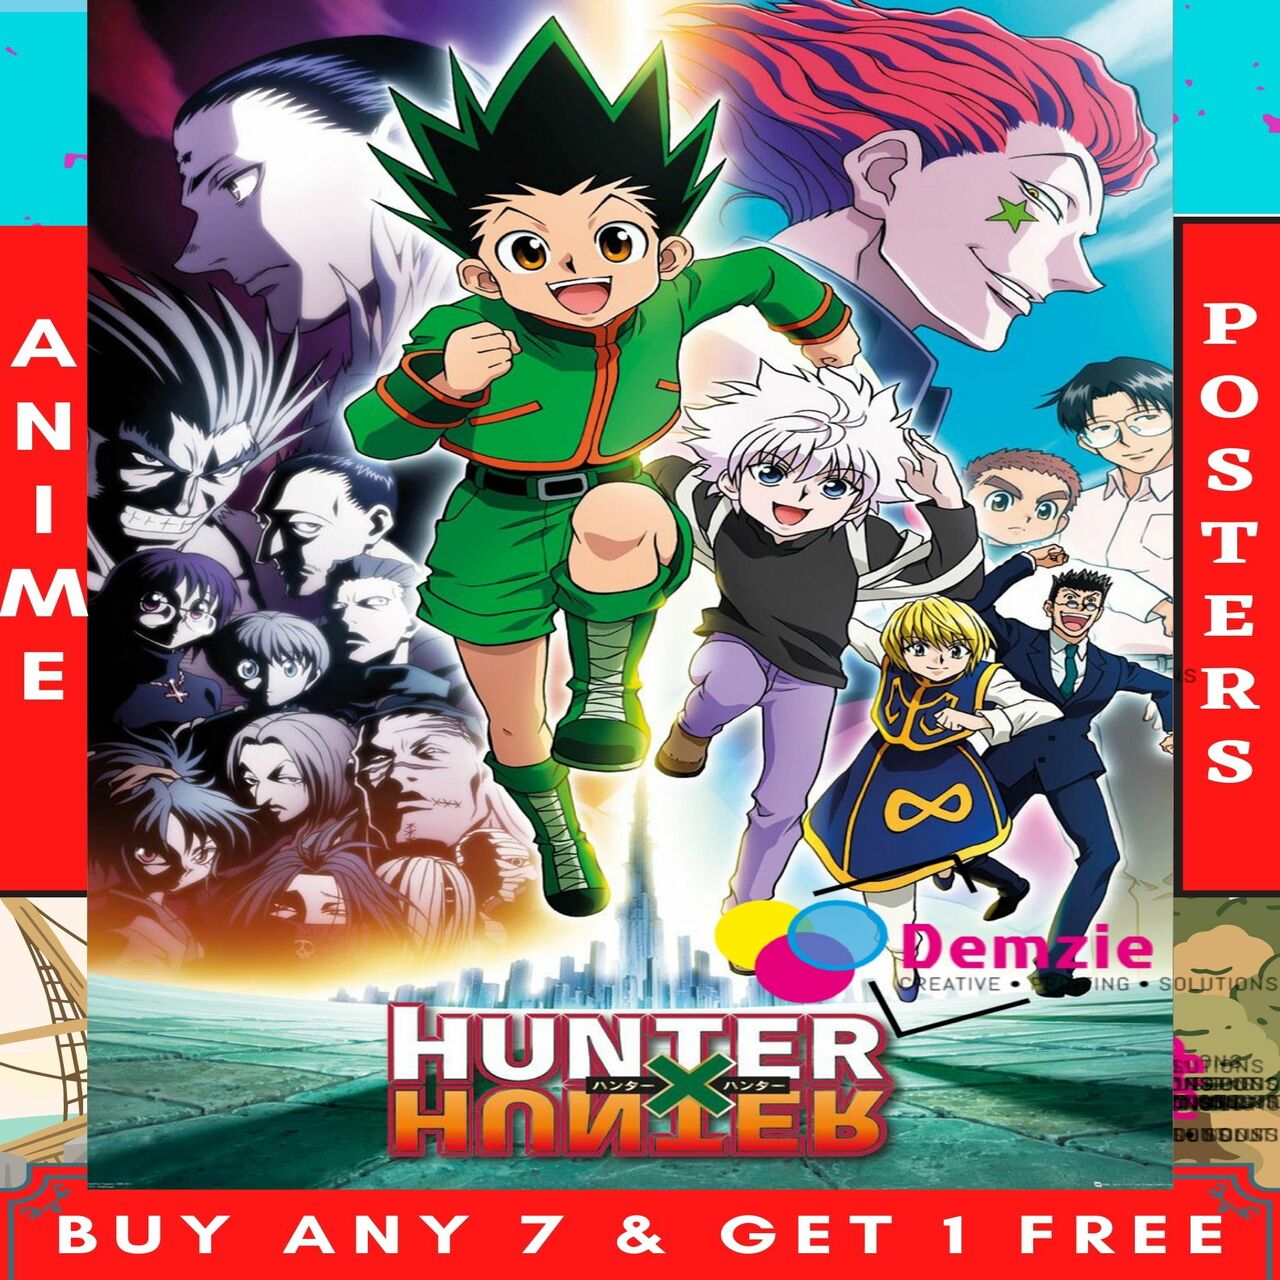 Hunter X Hunter A4 Size Wallpaper Poster